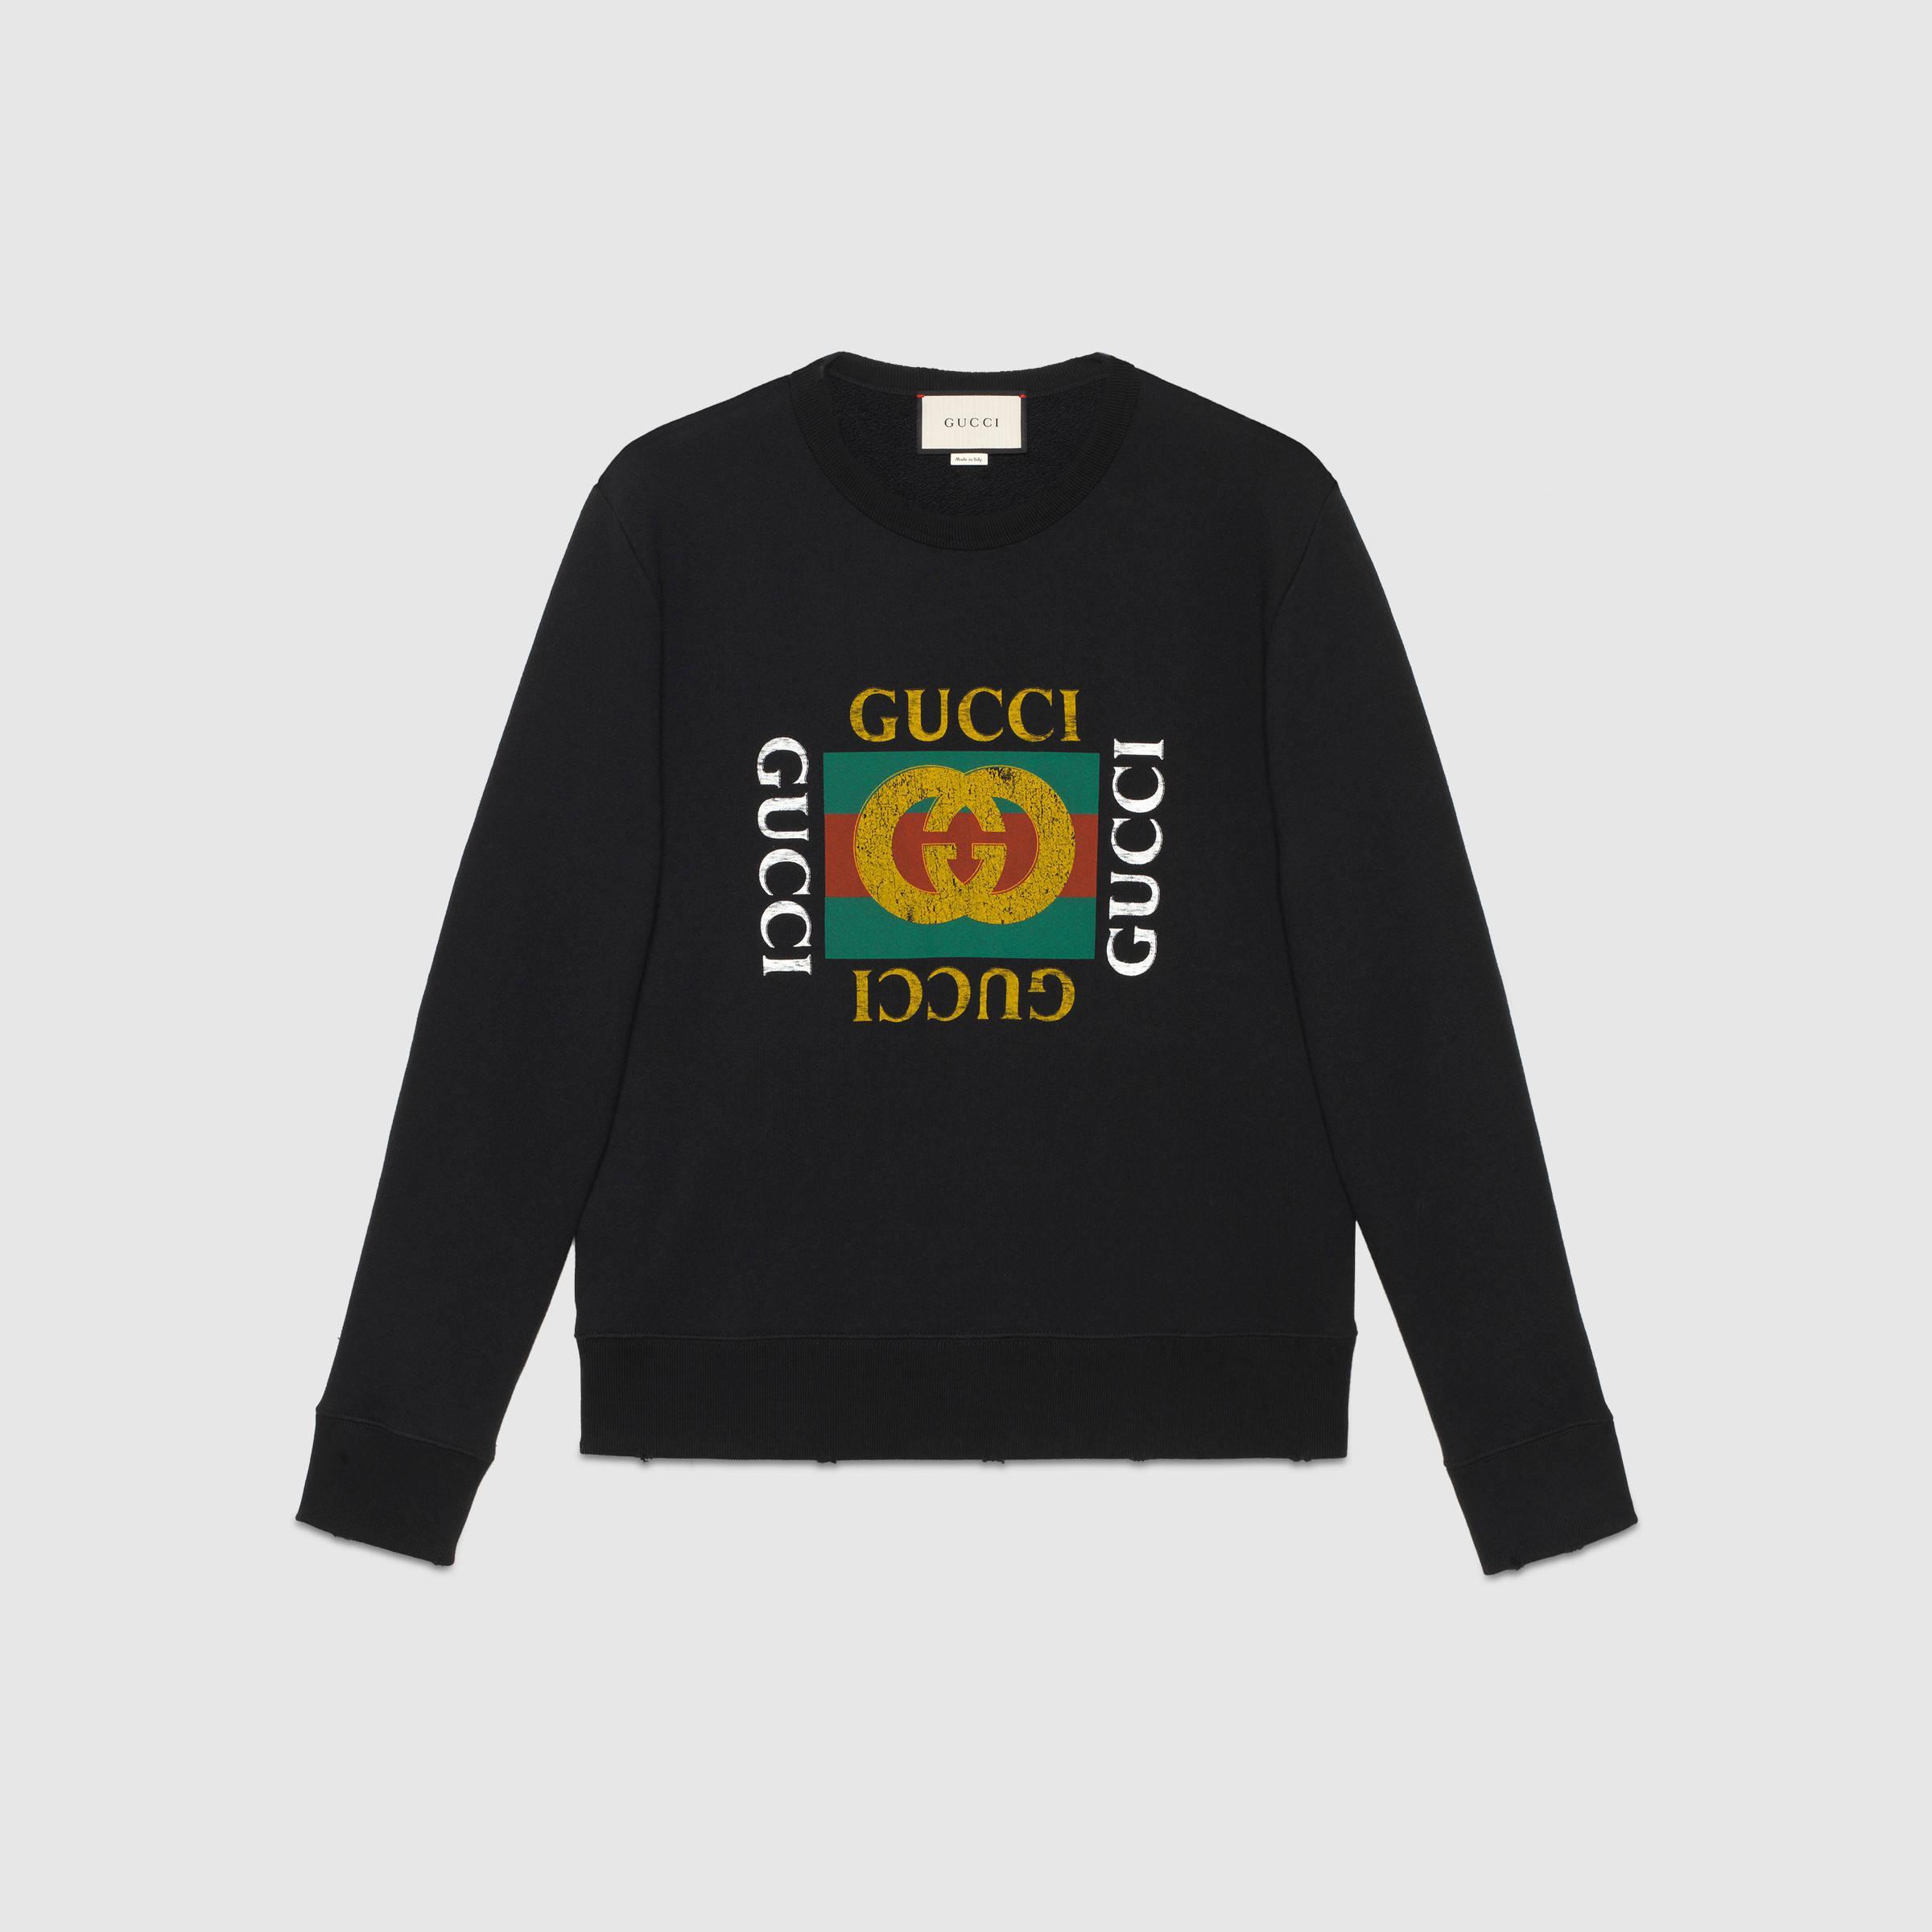 Real Gucci Logo - Discount Real Gucci Cotton sweatshirt with Gucci logo